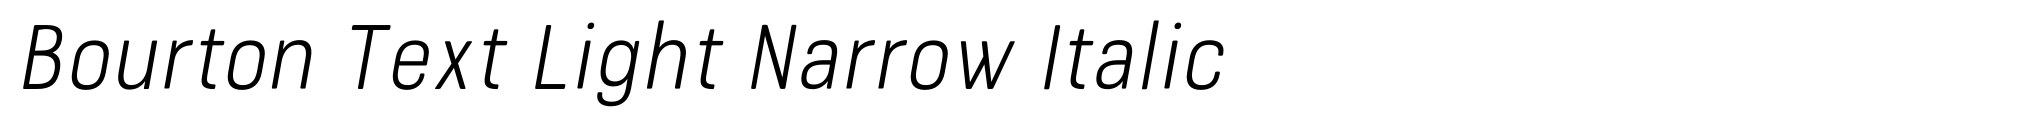 Bourton Text Light Narrow Italic image